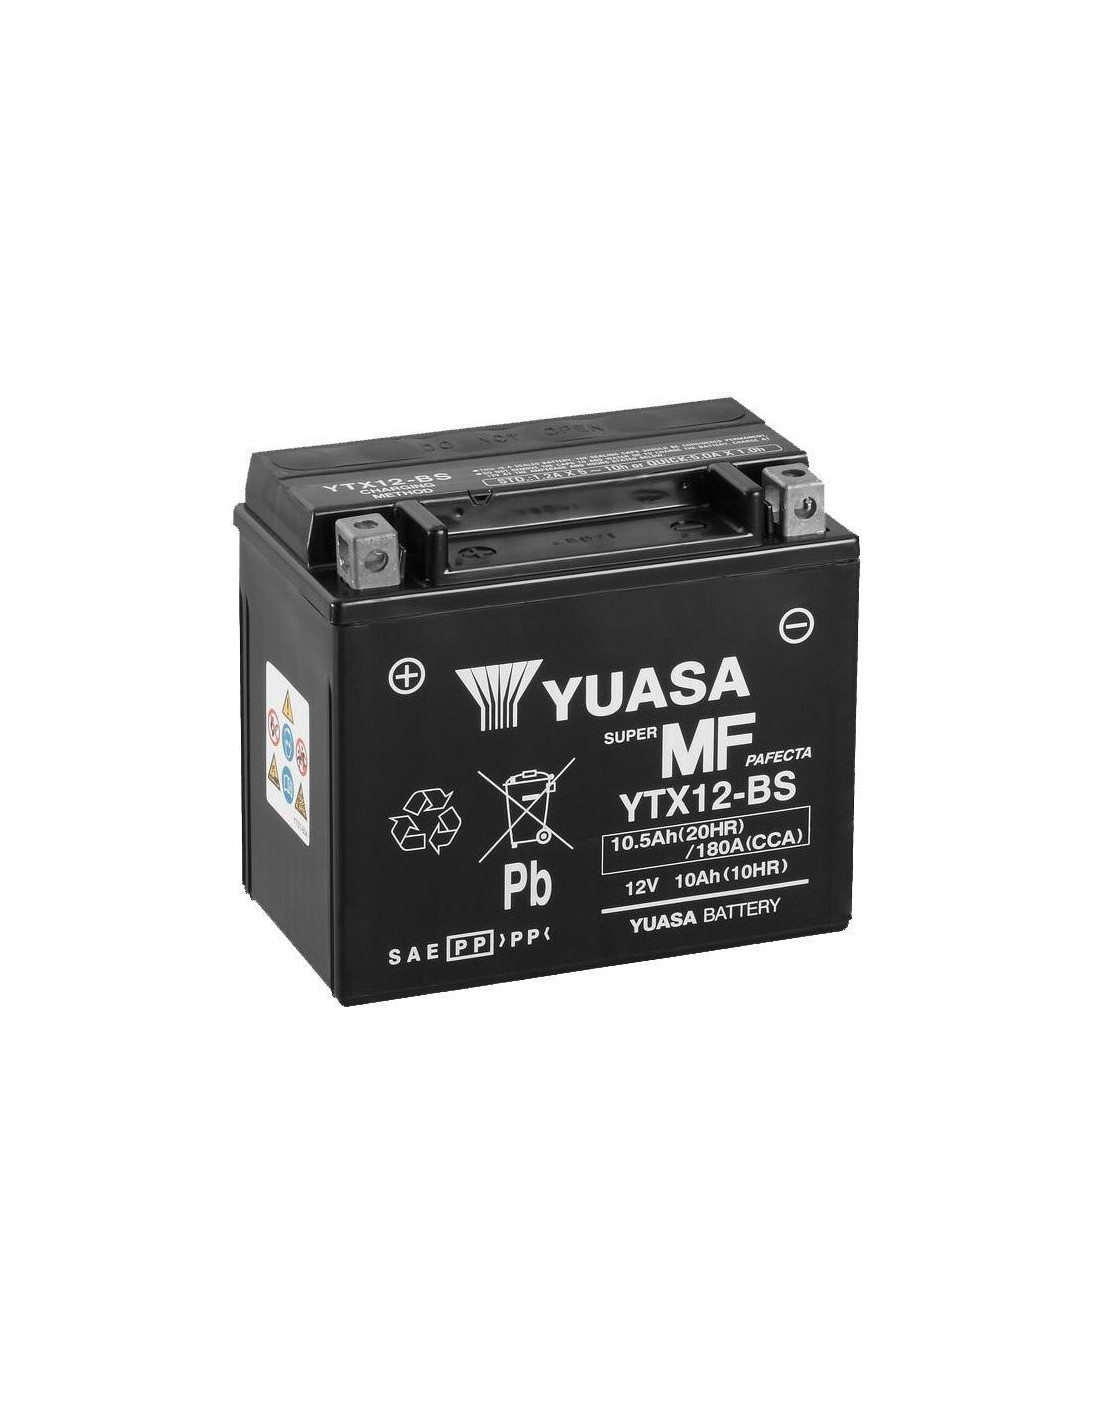 Comprar batería Yuasa YTX12-BS | Compralubricantes.com